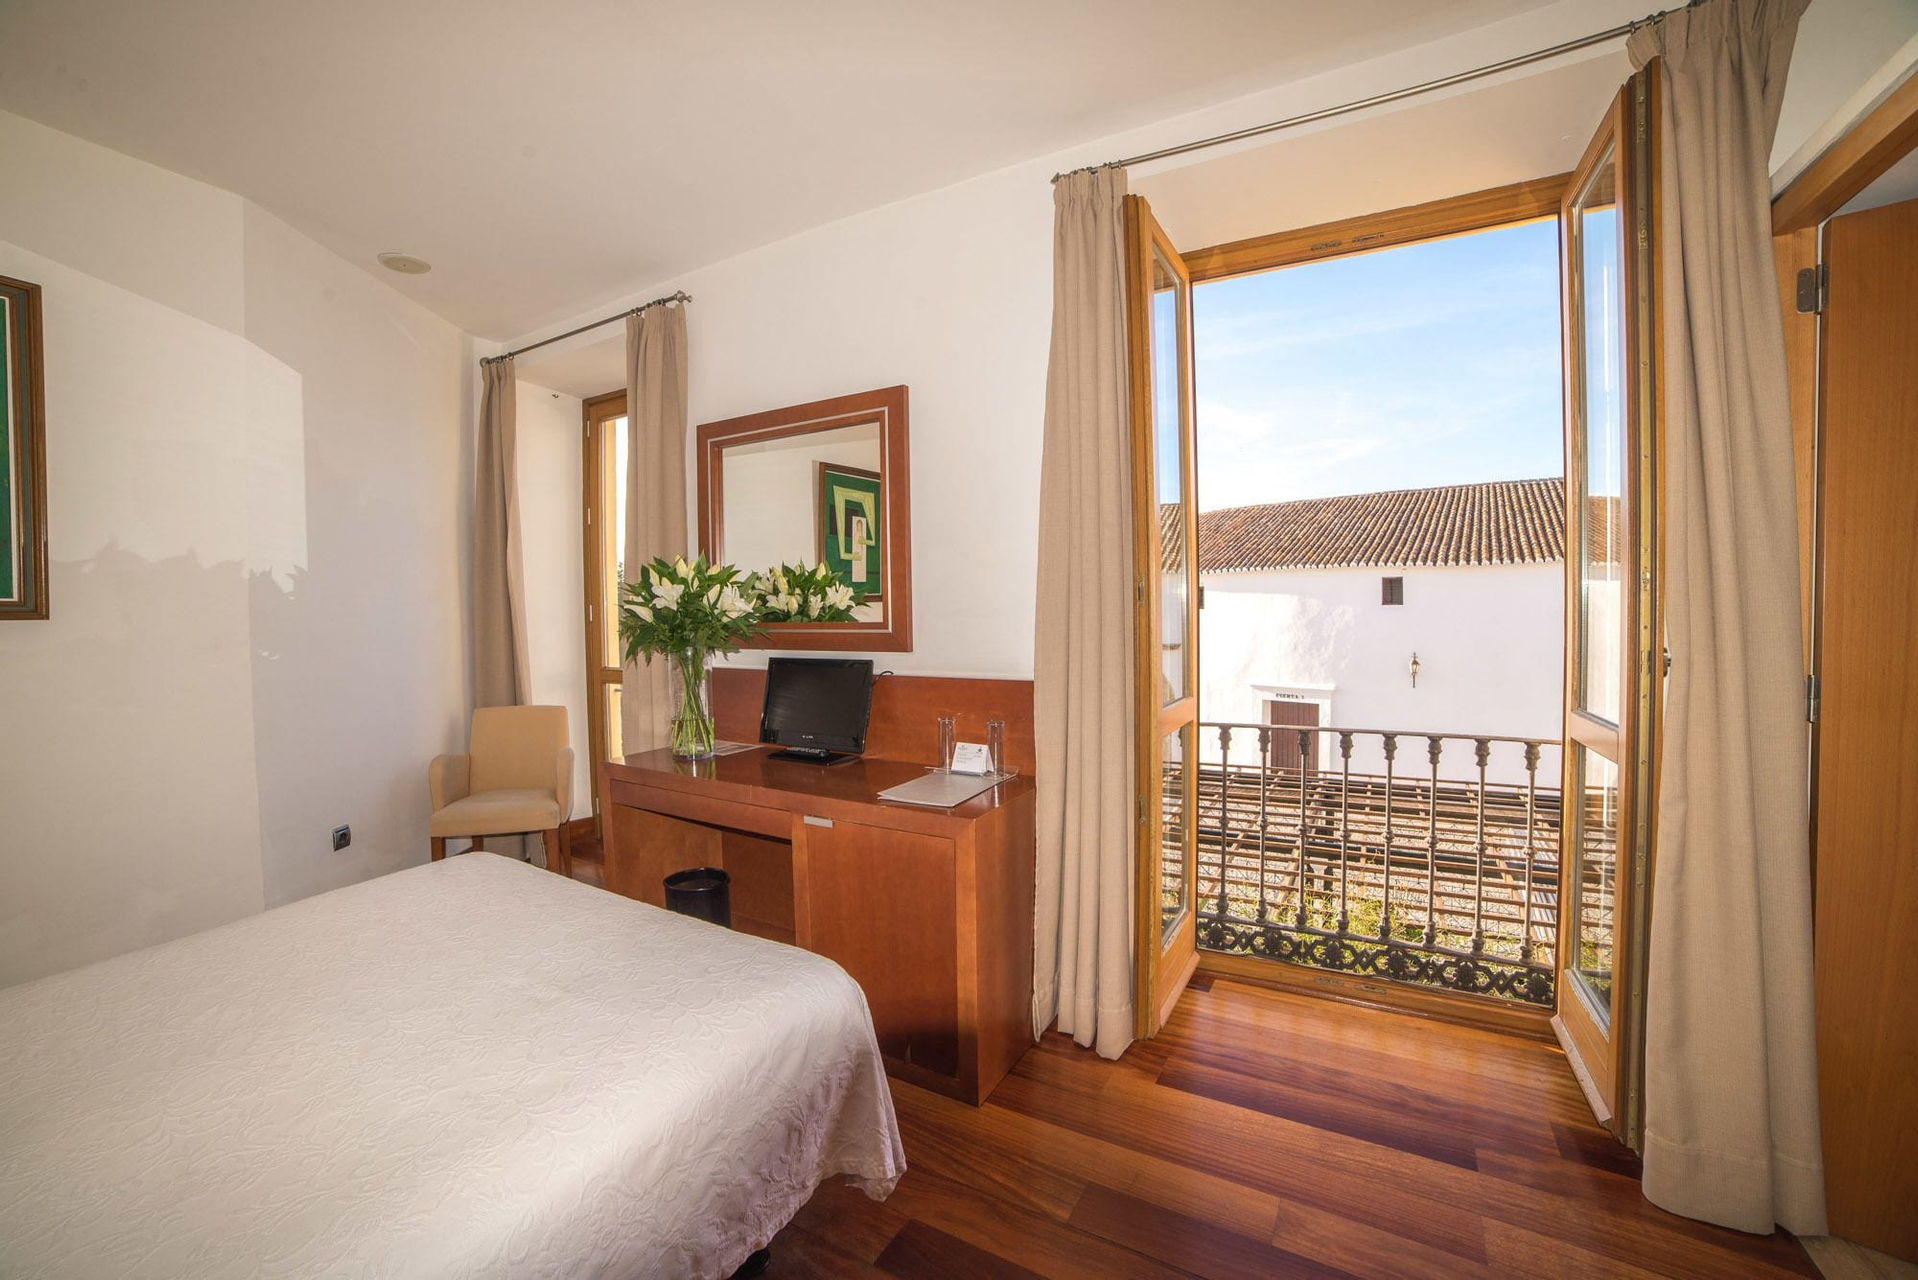 Bedroom 2, Acinipo, Málaga